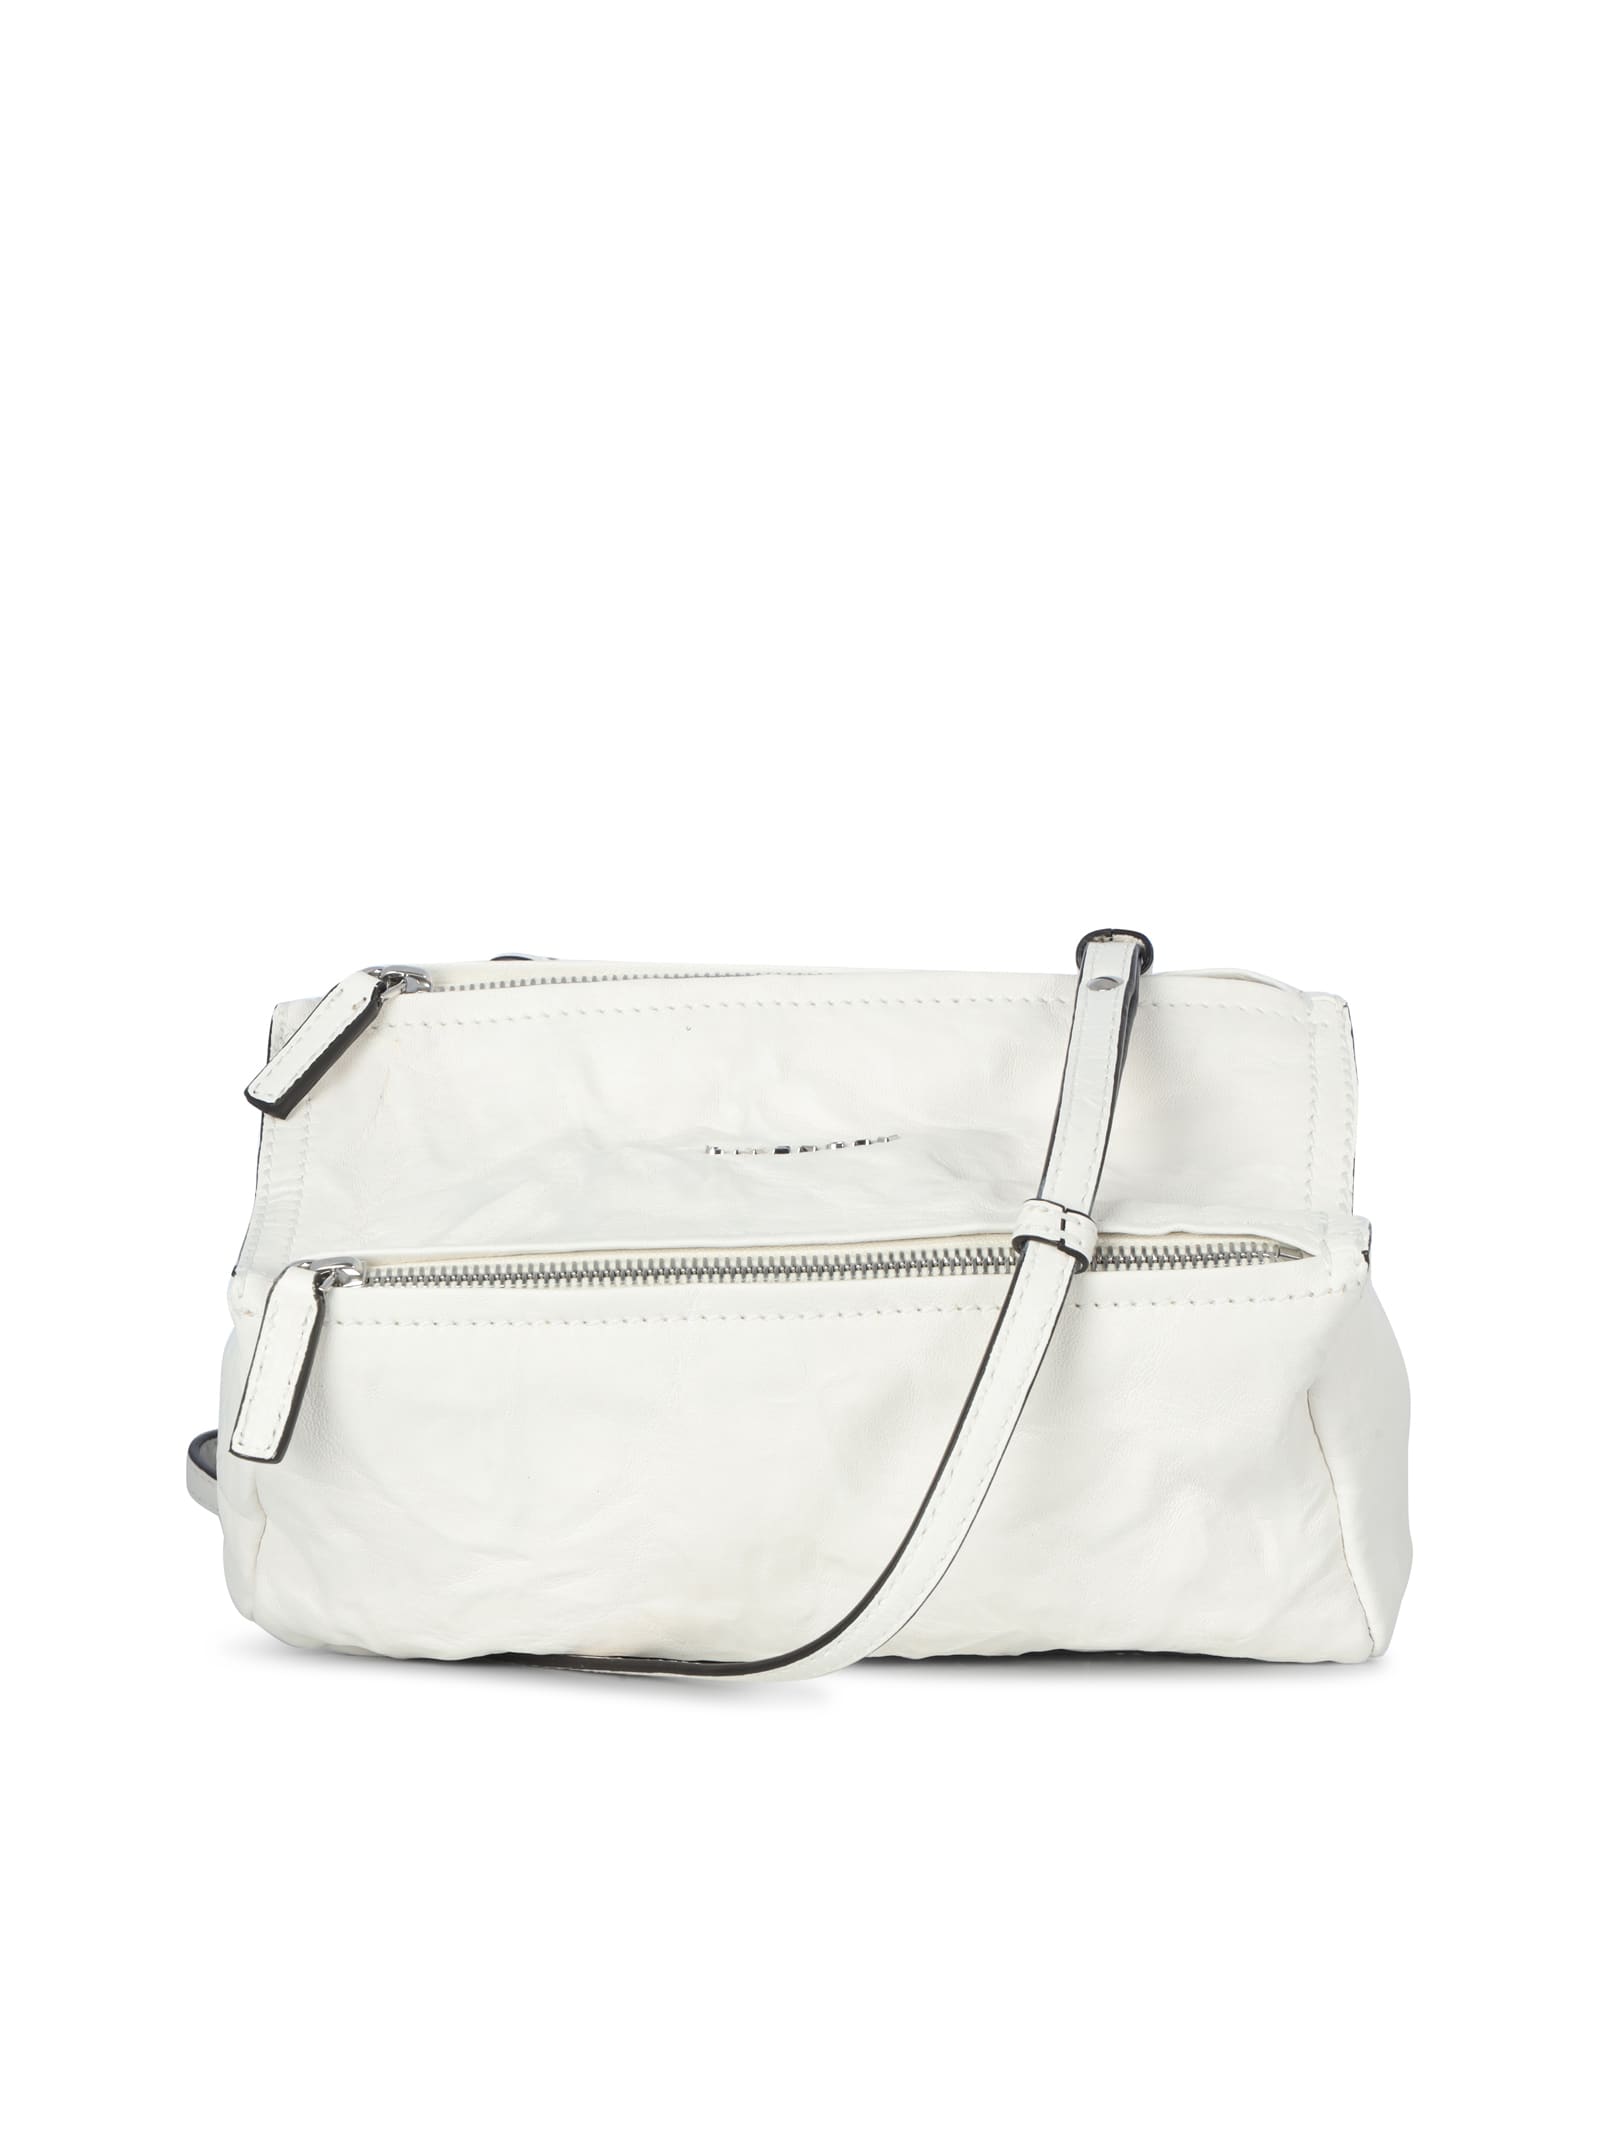 Givenchy Pandora Mini Bag In Ivory